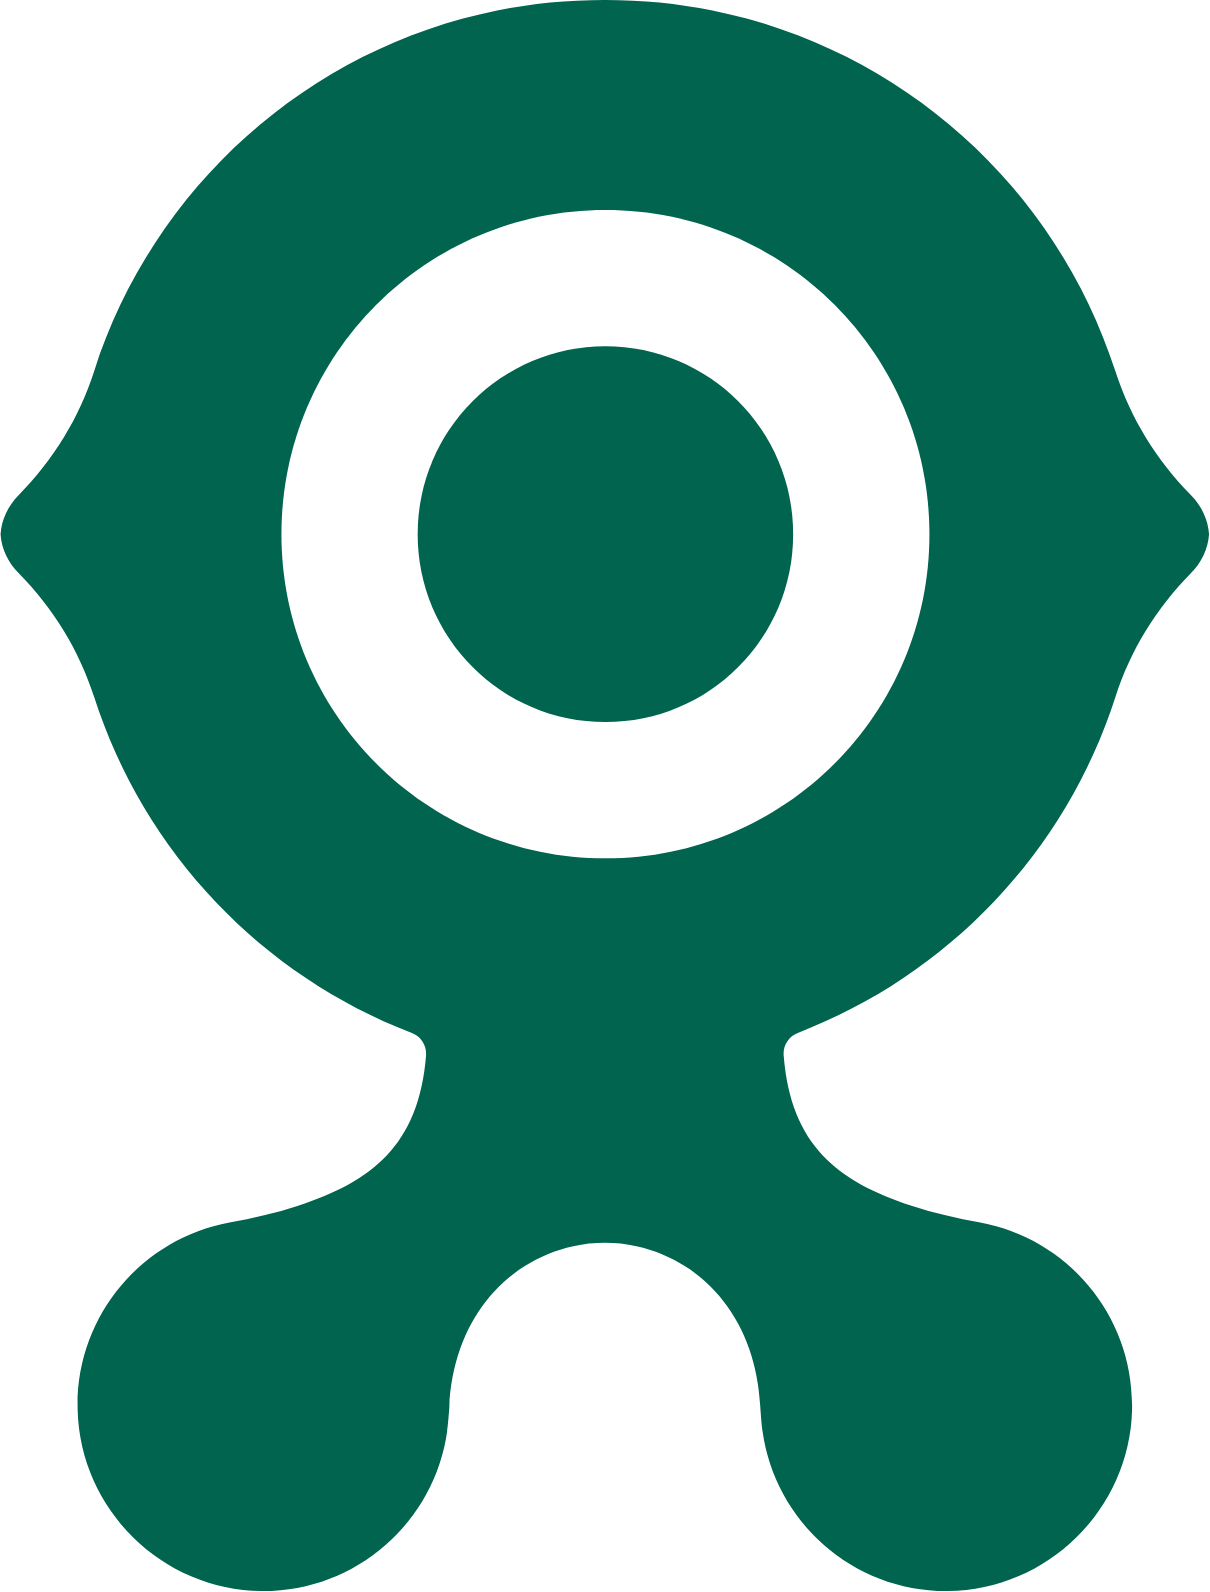 Gojek Logo - PowerFleet logo in transparent PNG and ...